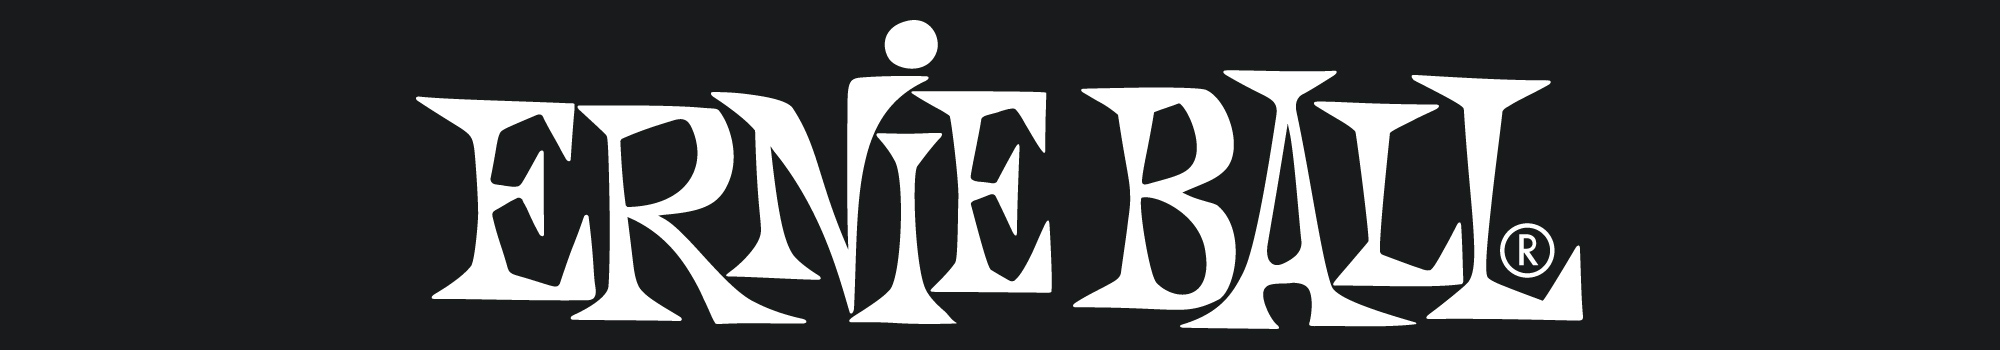 Ernie Ball Logo White on Black Background